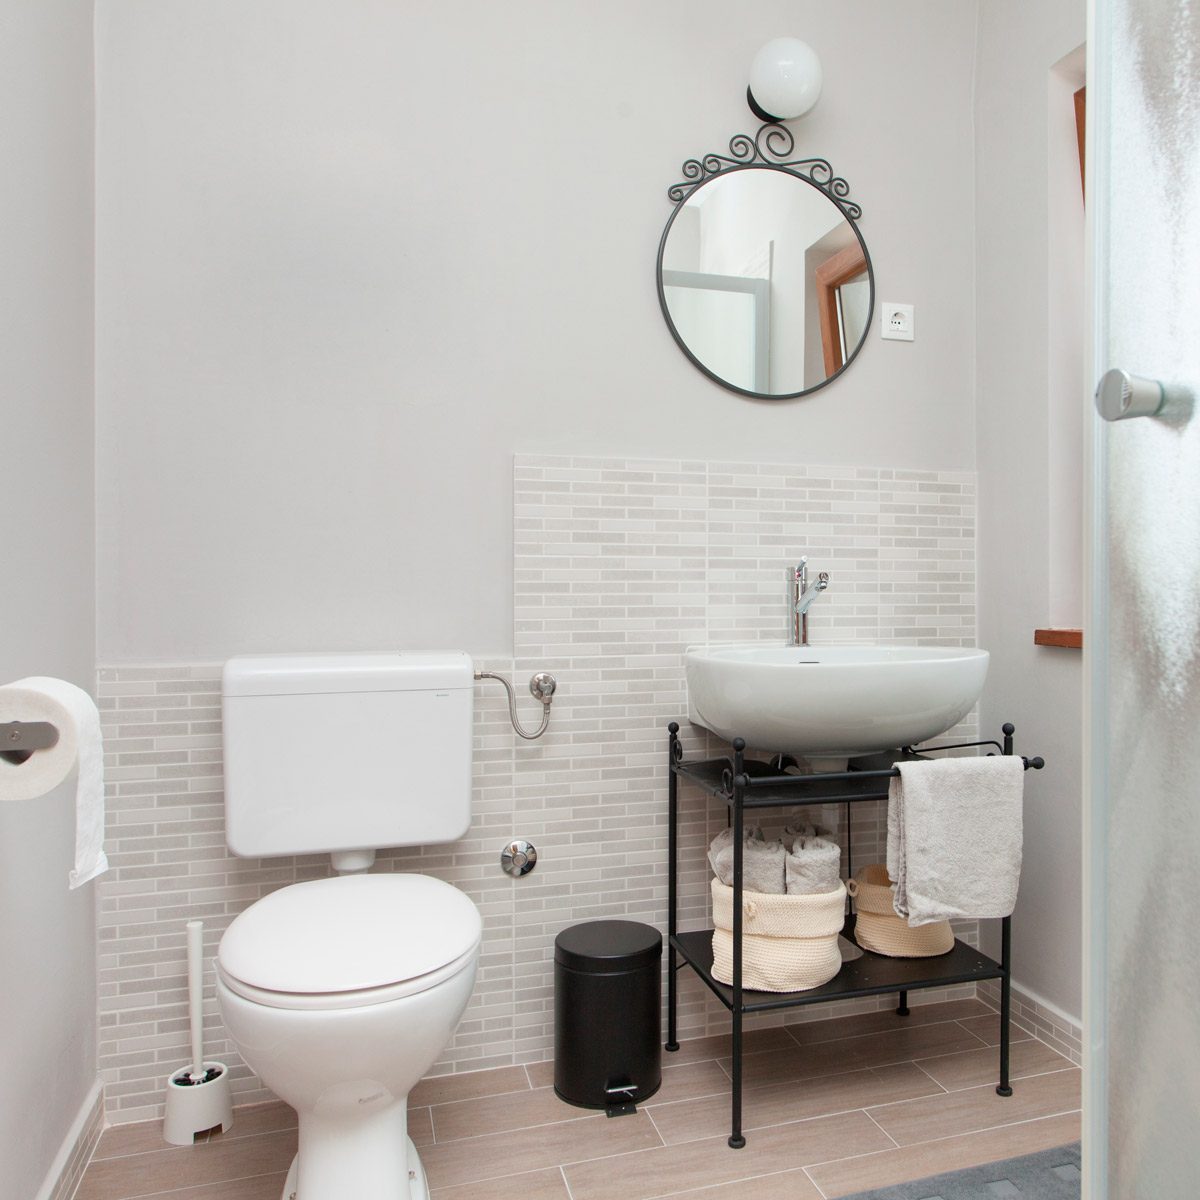 10 Small Bathroom Ideas That Make a Big Impact | Family ...